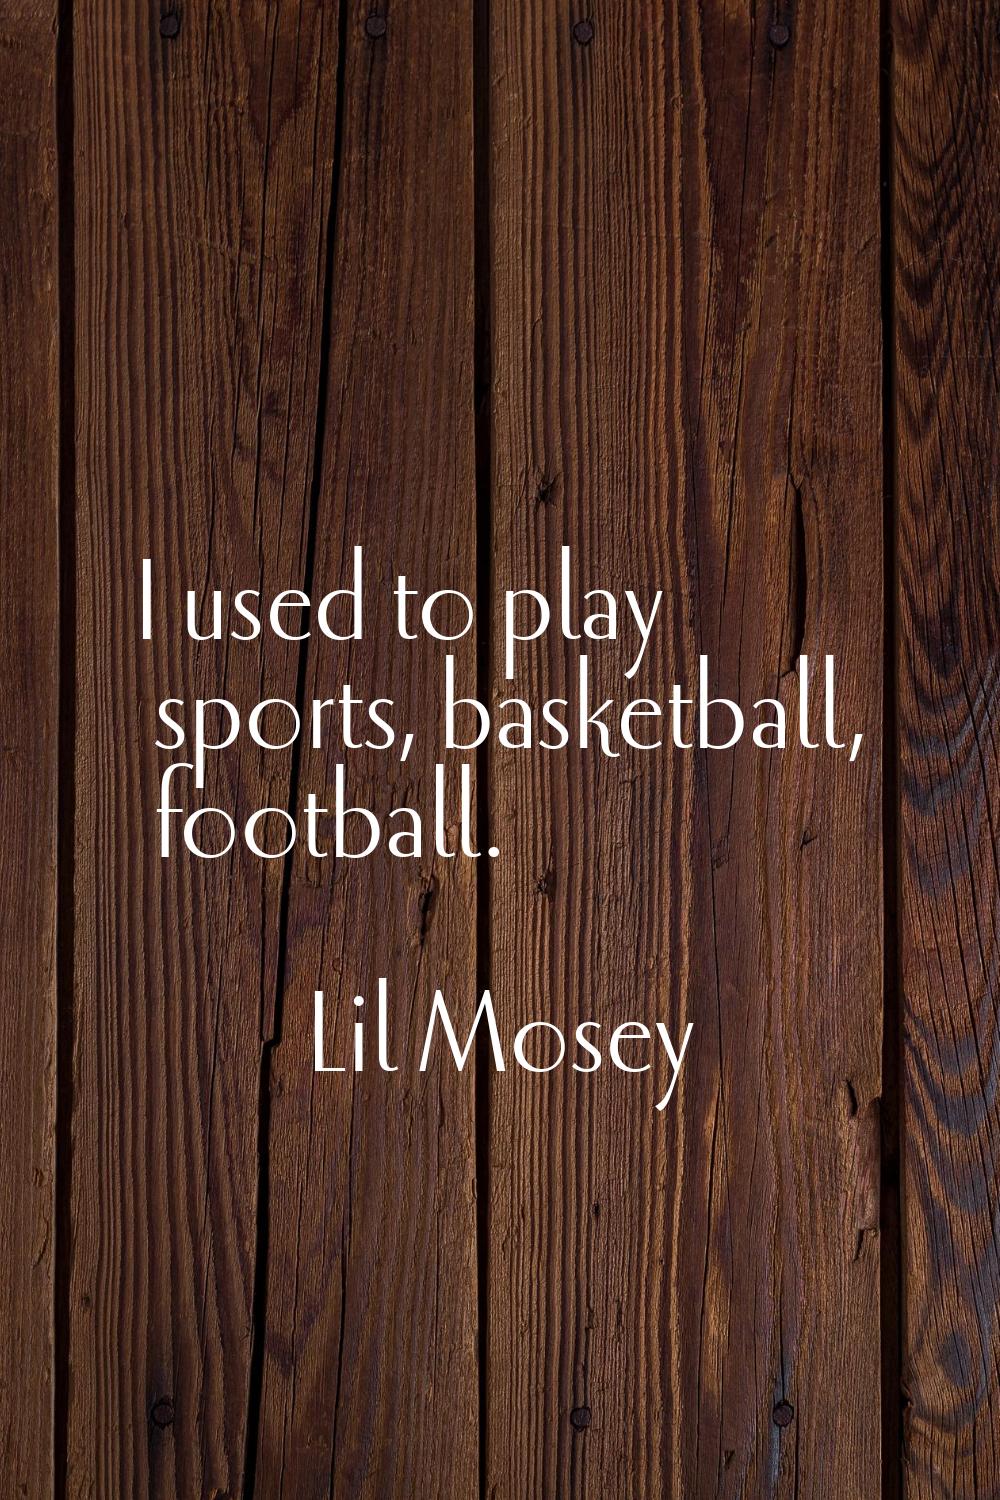 I used to play sports, basketball, football.